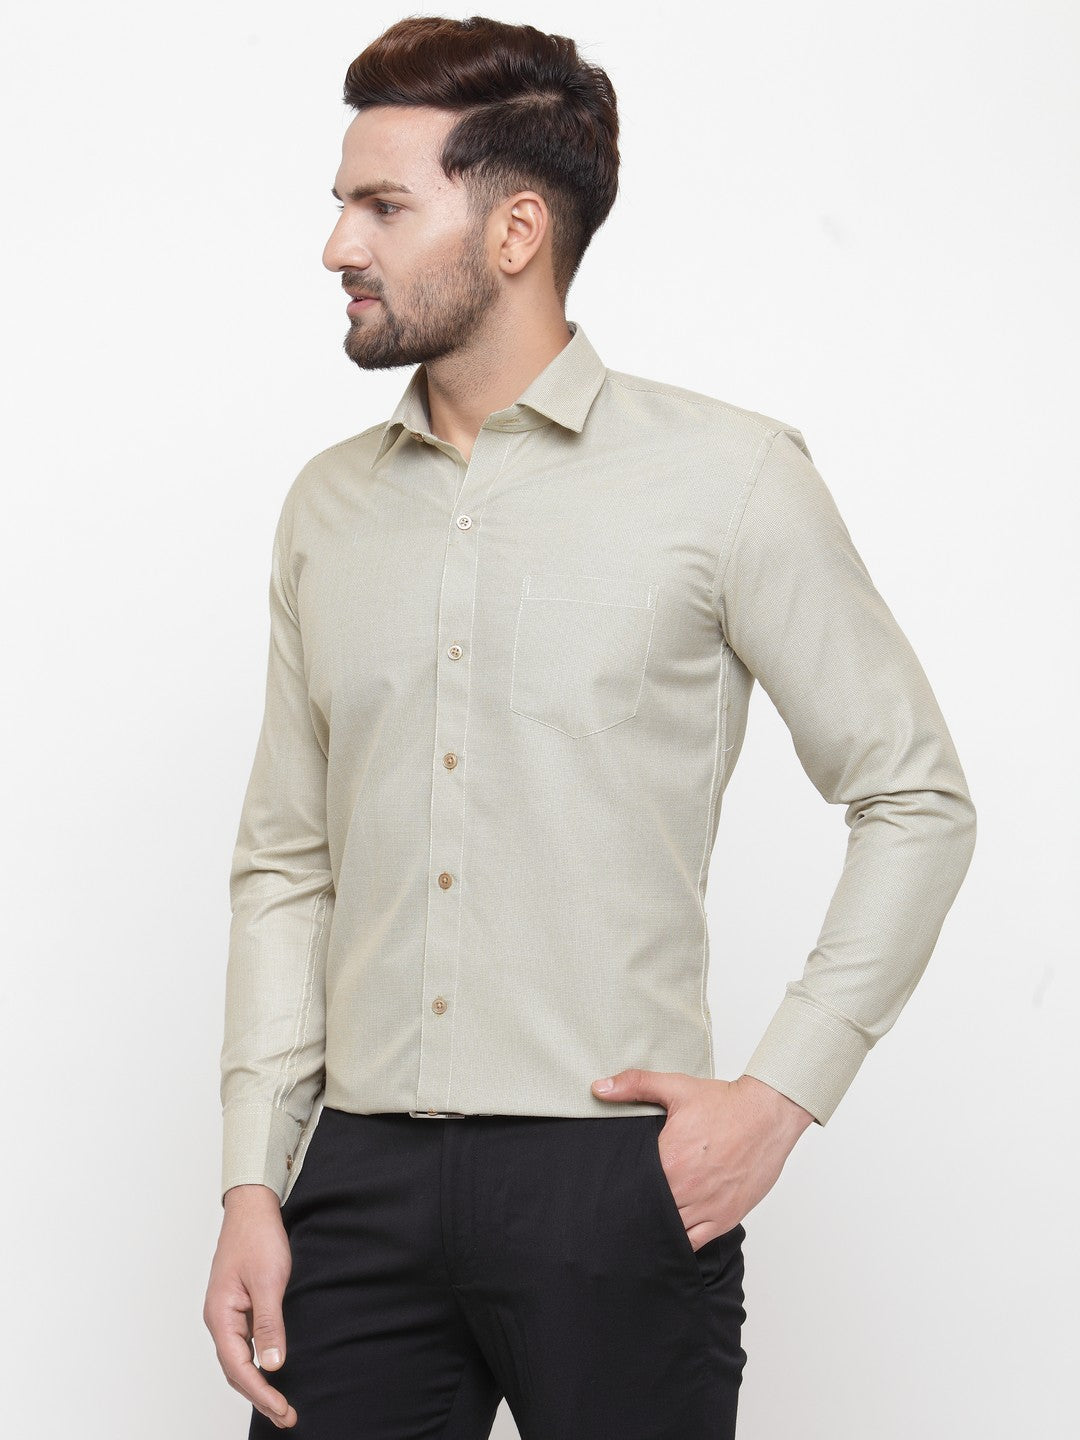 Men's Olive Cotton Geometric Formal Shirts ( SF 434Olive ) - Jainish